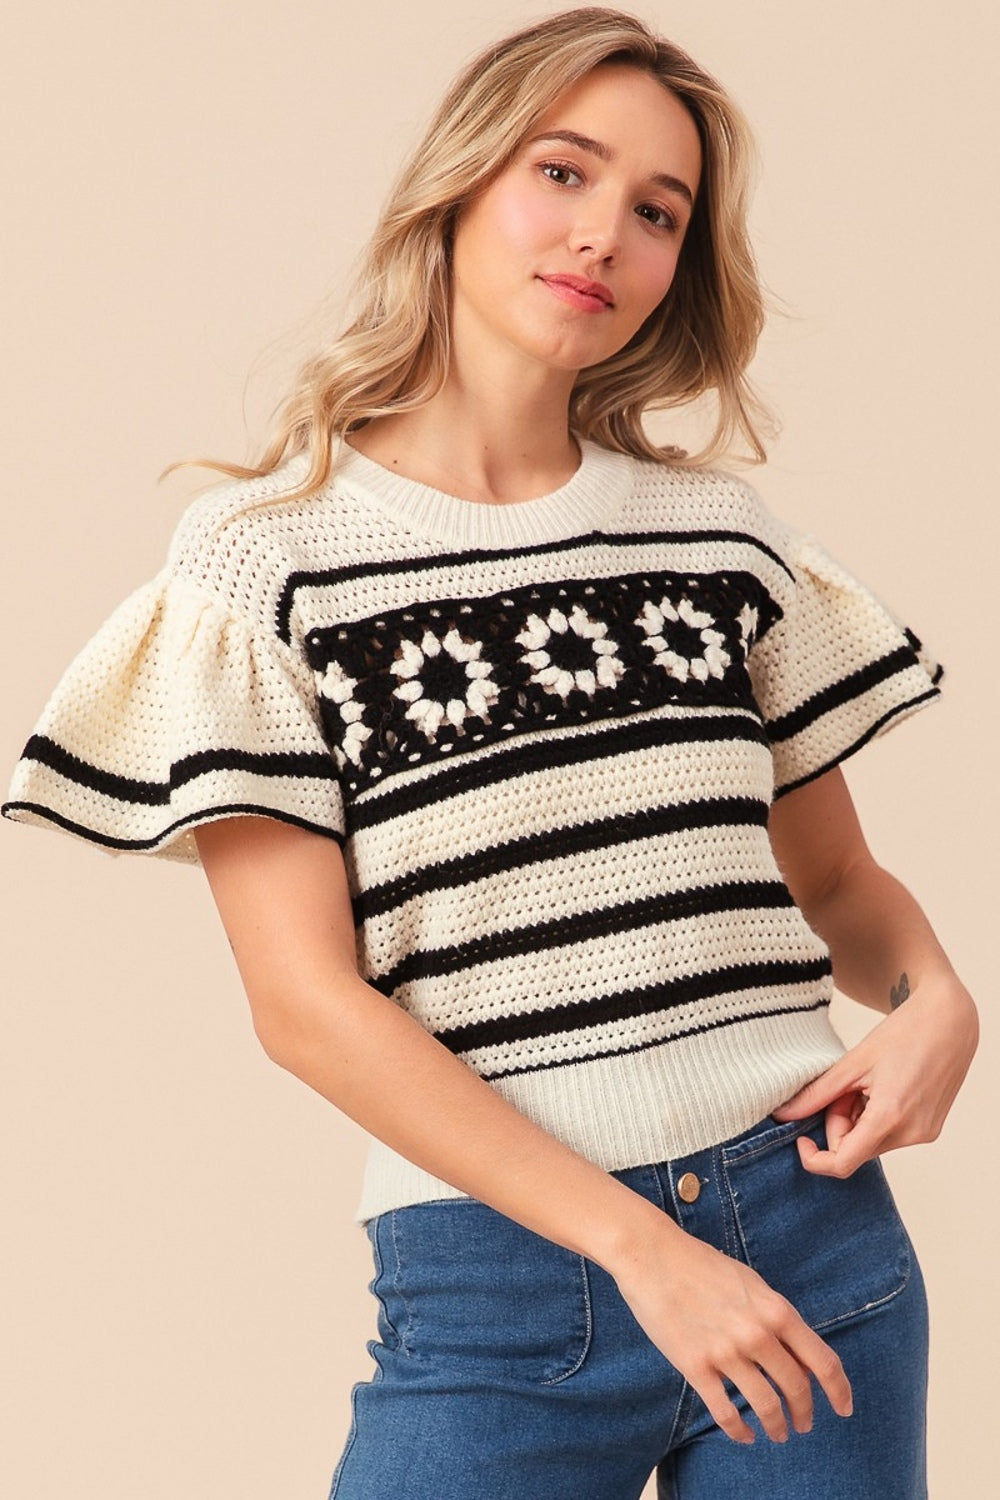 BiBi Granny Square Short Sleeve Striped Sweater